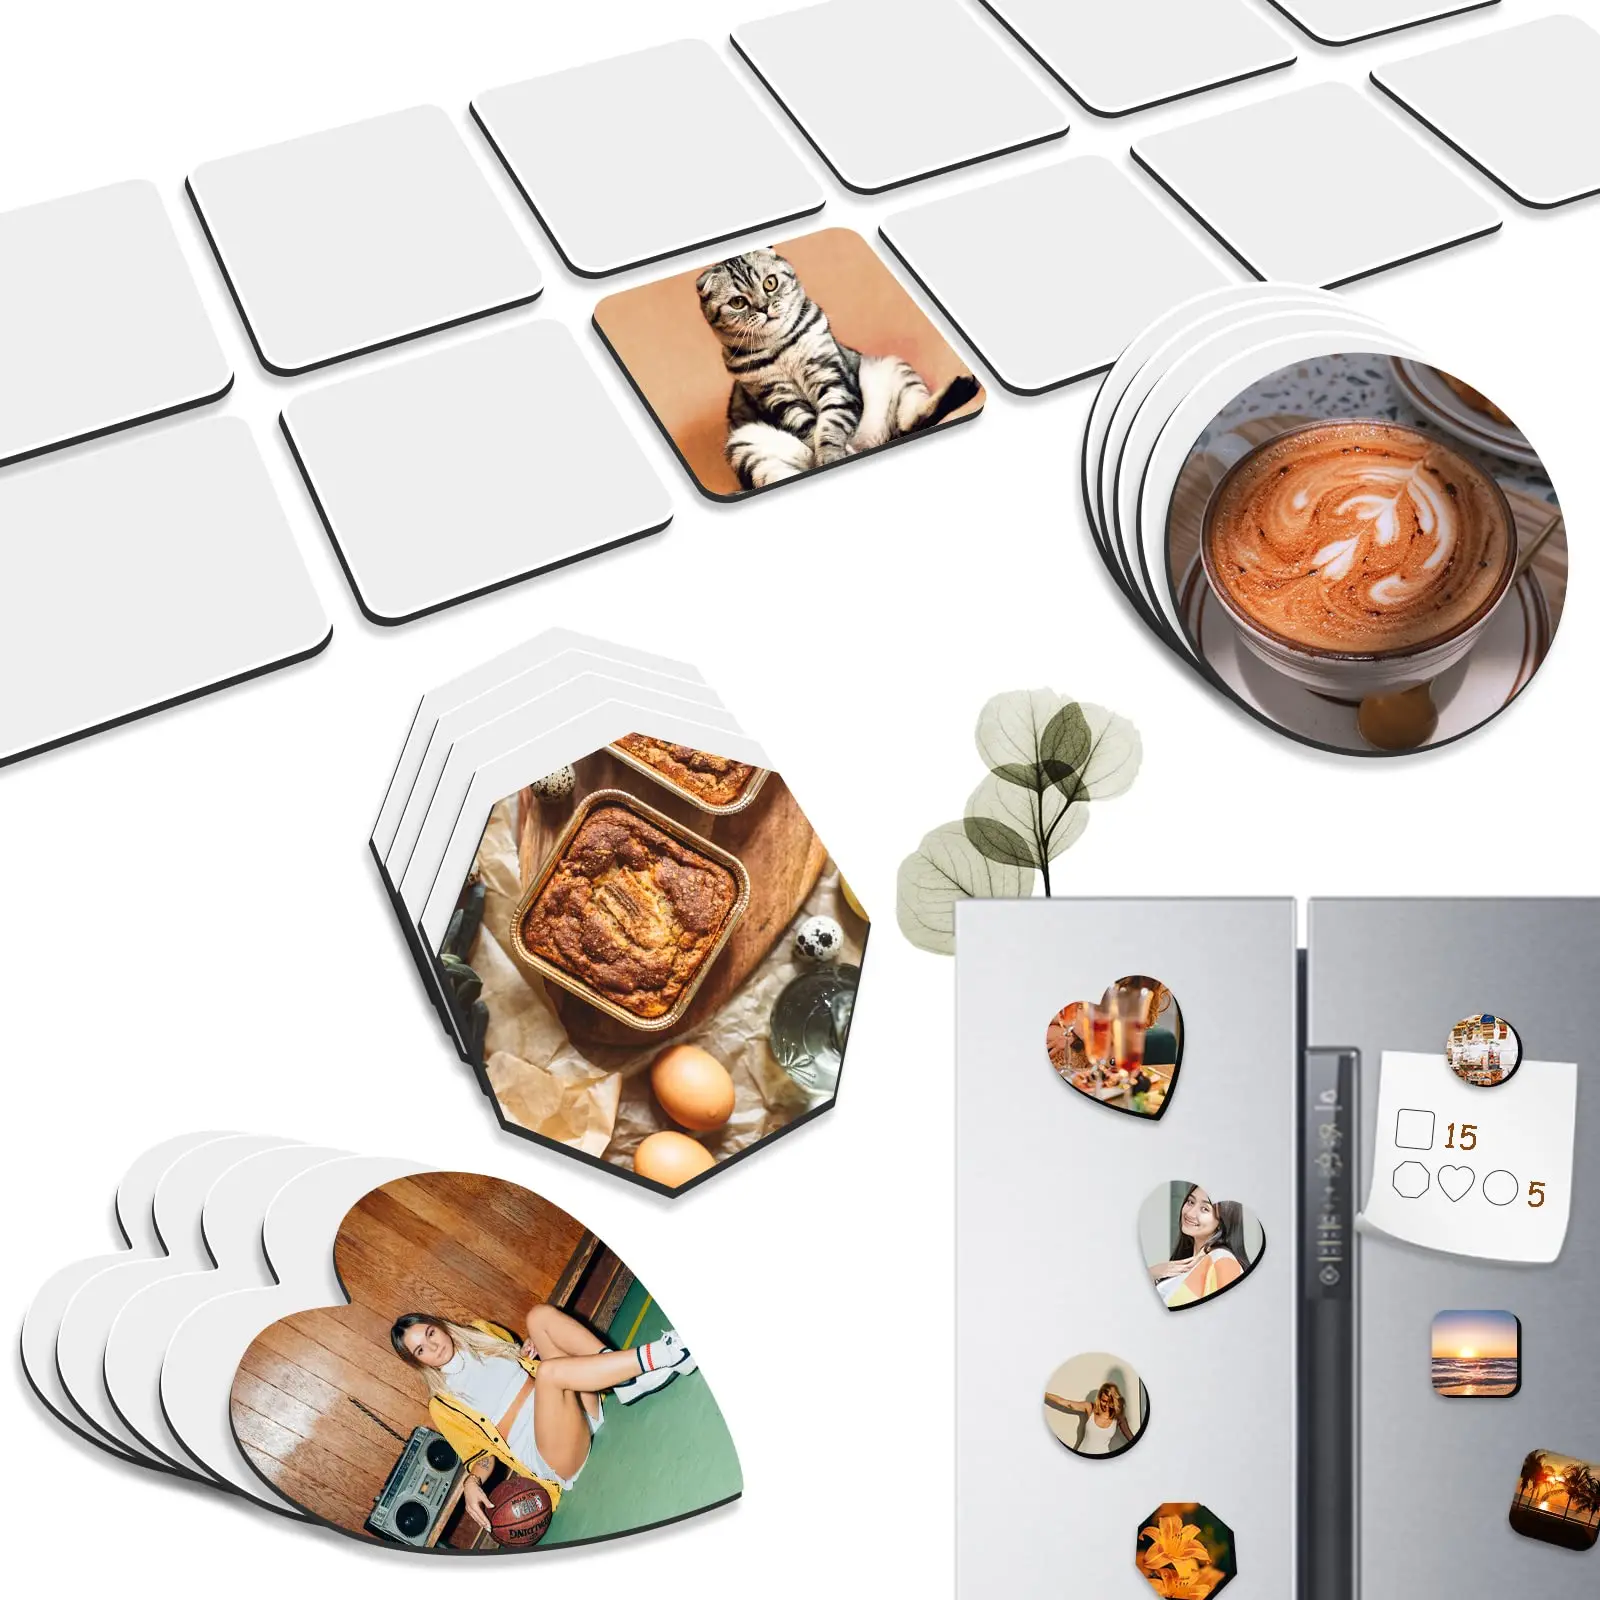 

20PCS Sublimation Blanks Refrigerator Fridge Magnets DIY Decorative Magnets for Kitchen Home Office Office Whiteboard Calendar